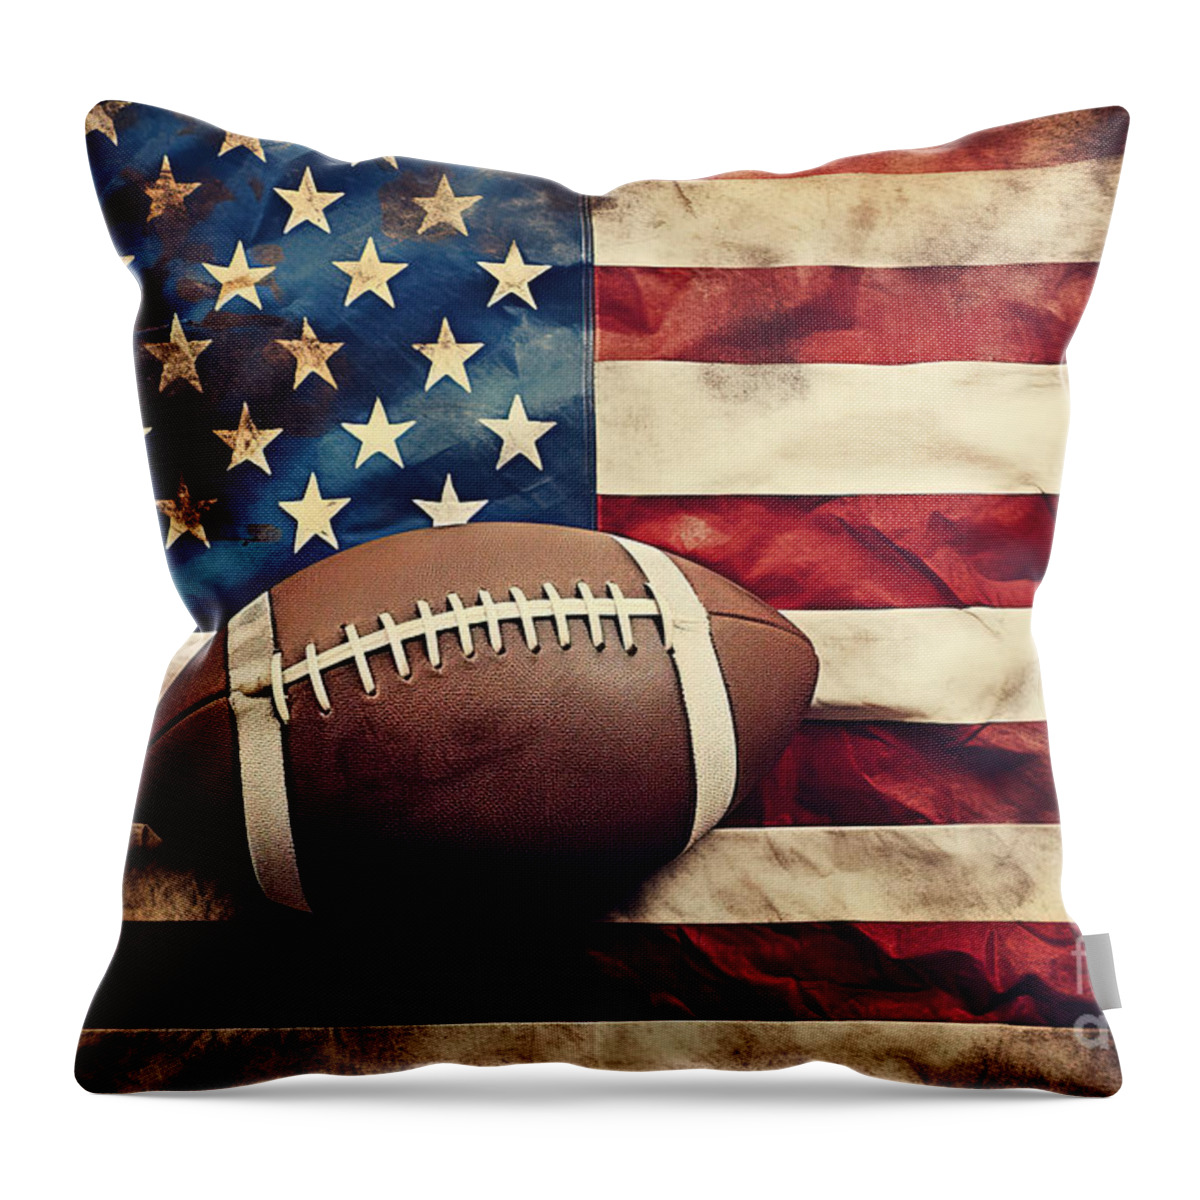 Vintage American Football Throw Pillow featuring the digital art Vintage American Football by Carlos Diaz